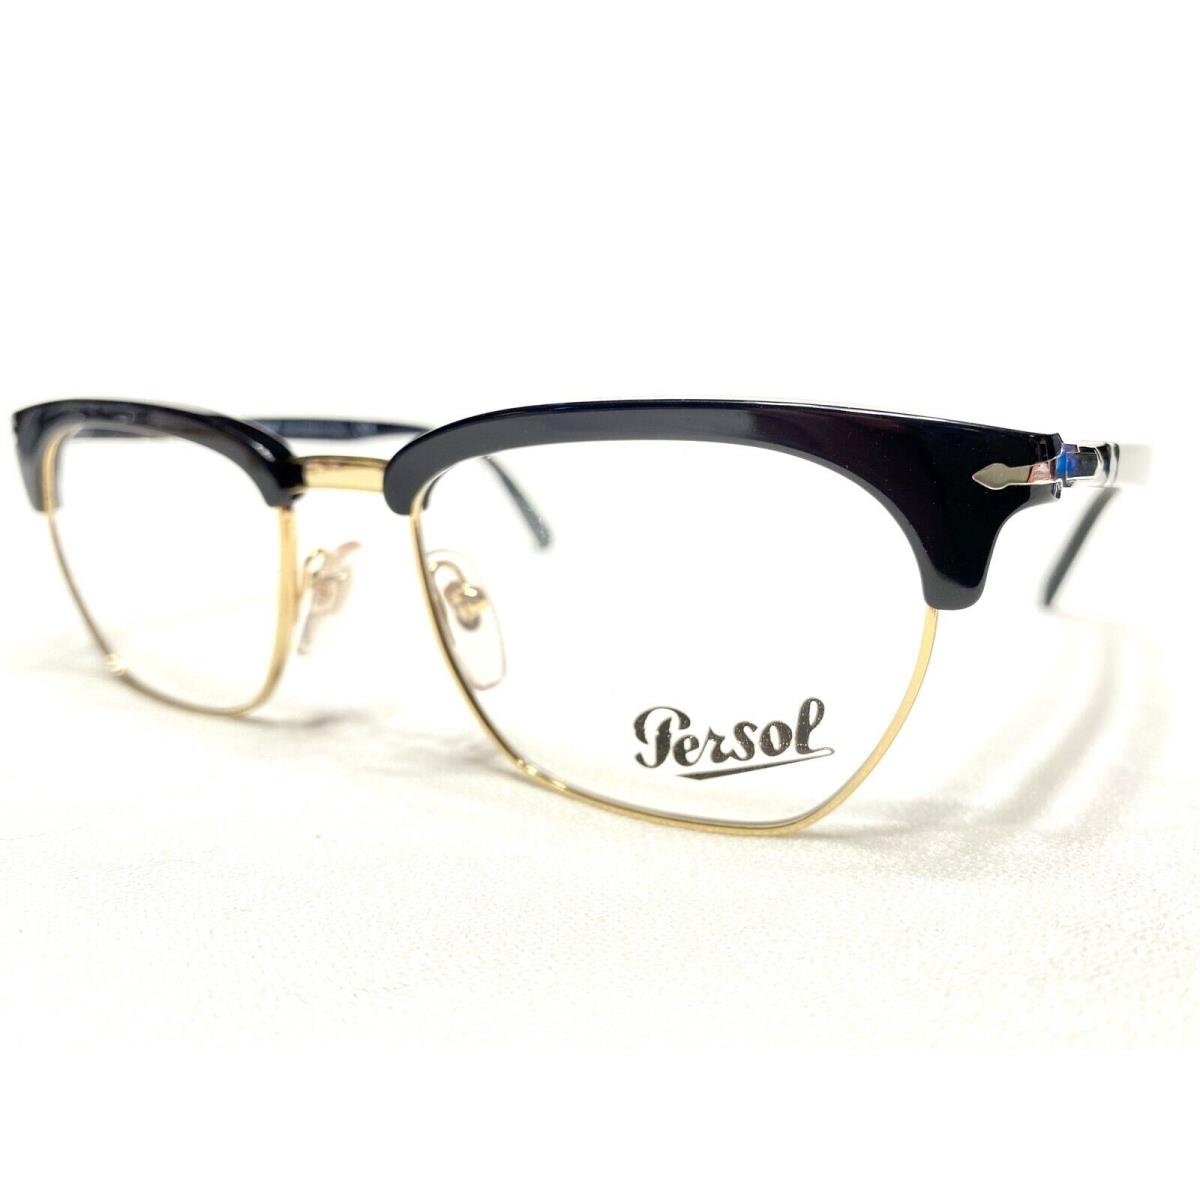 Persol PO3196-V 95 Tailoring Edition Mens Black/gold Eyeglasses Frames 53/19 - Black & Gold , Black & Gold Frame, 95 Manufacturer